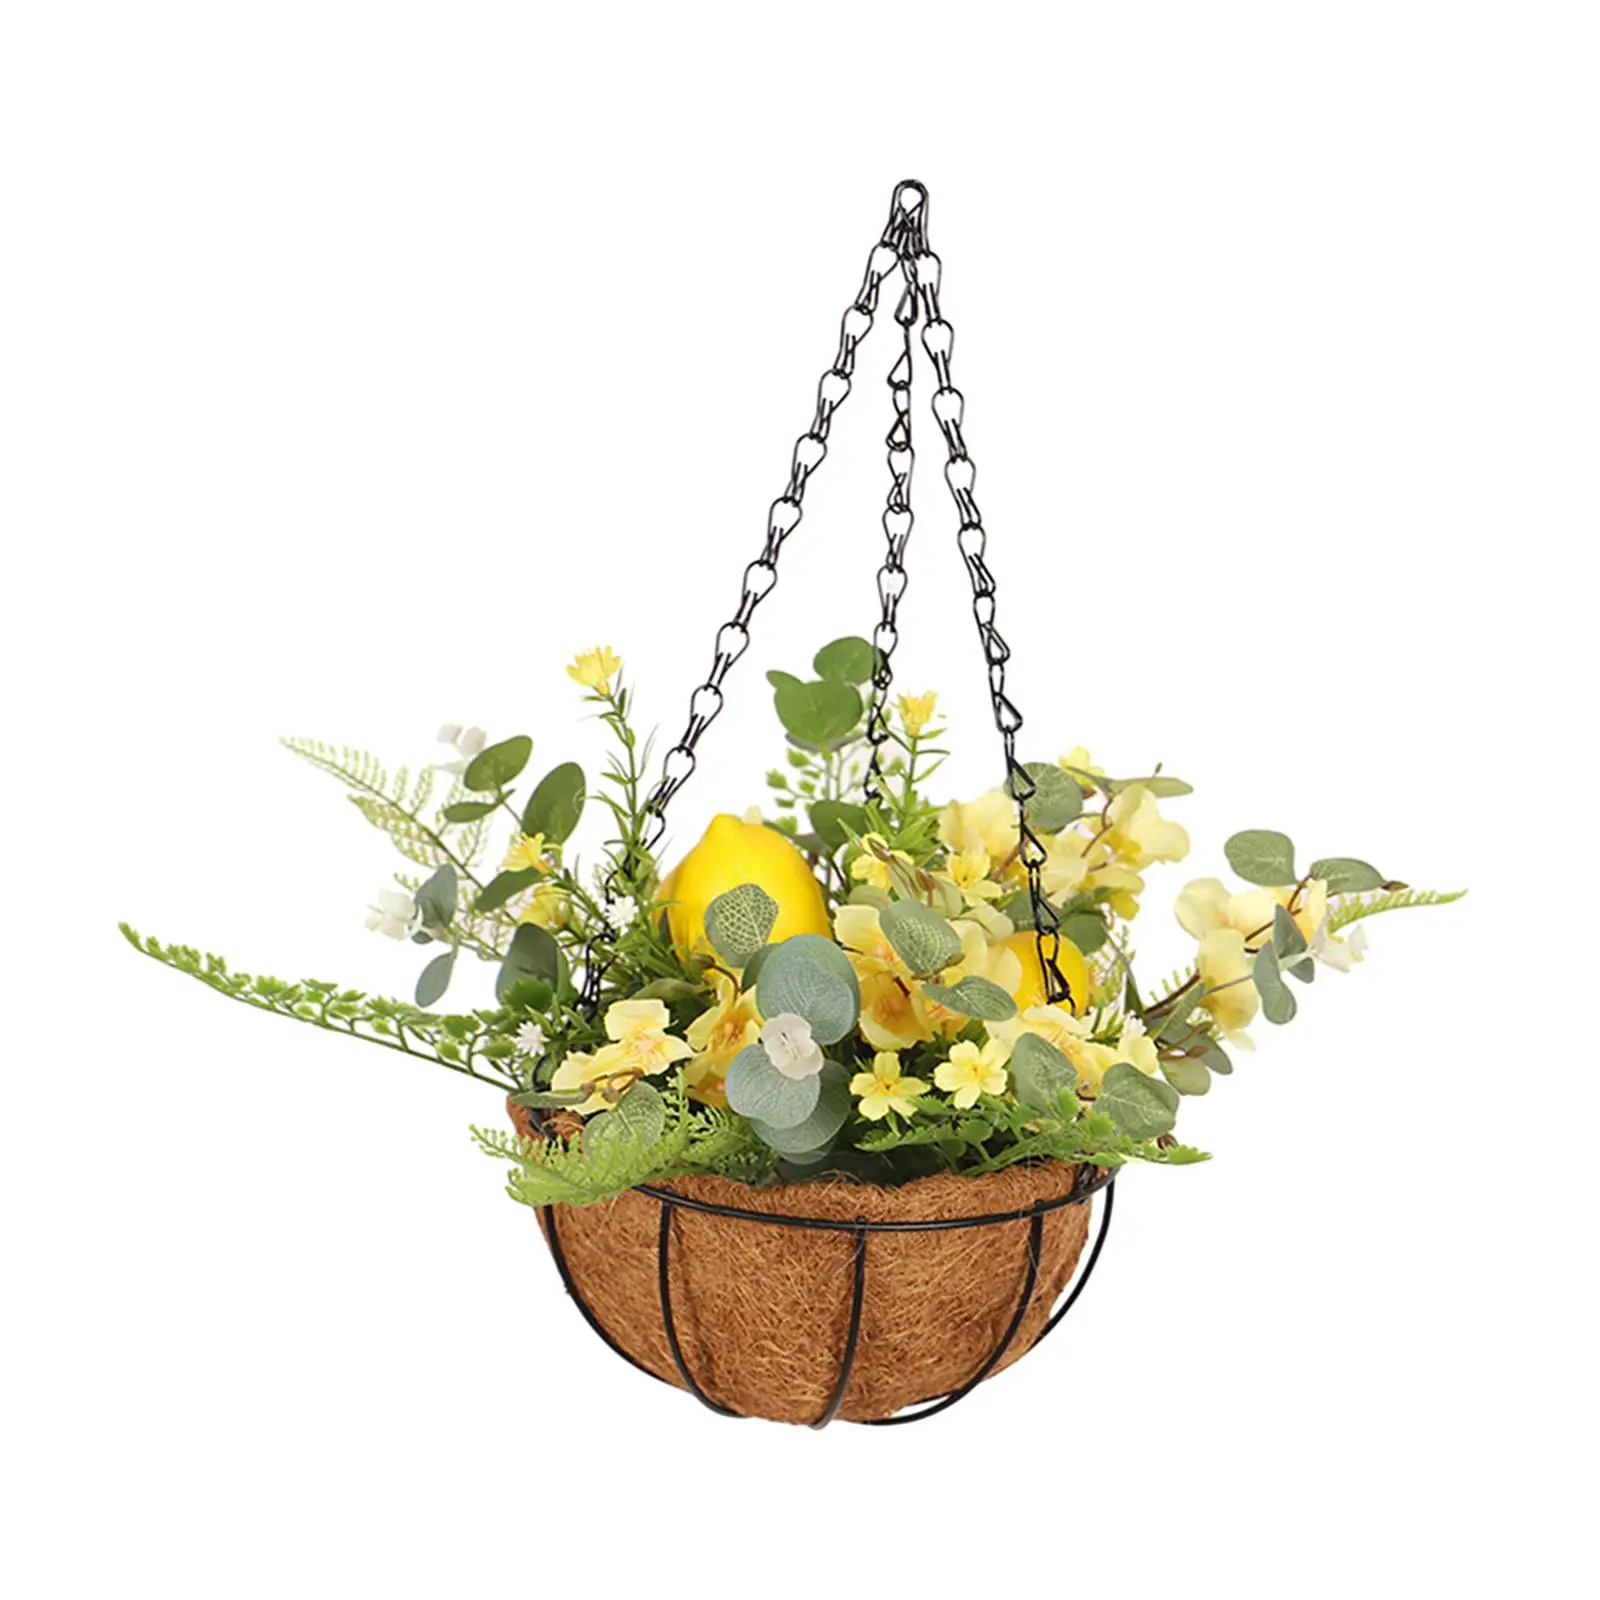 Artificial Hanging Flowers in Basket Floal Arrangement Decor Chain Flower Pot for Garden Porch Backyard Balcony Home Decorations